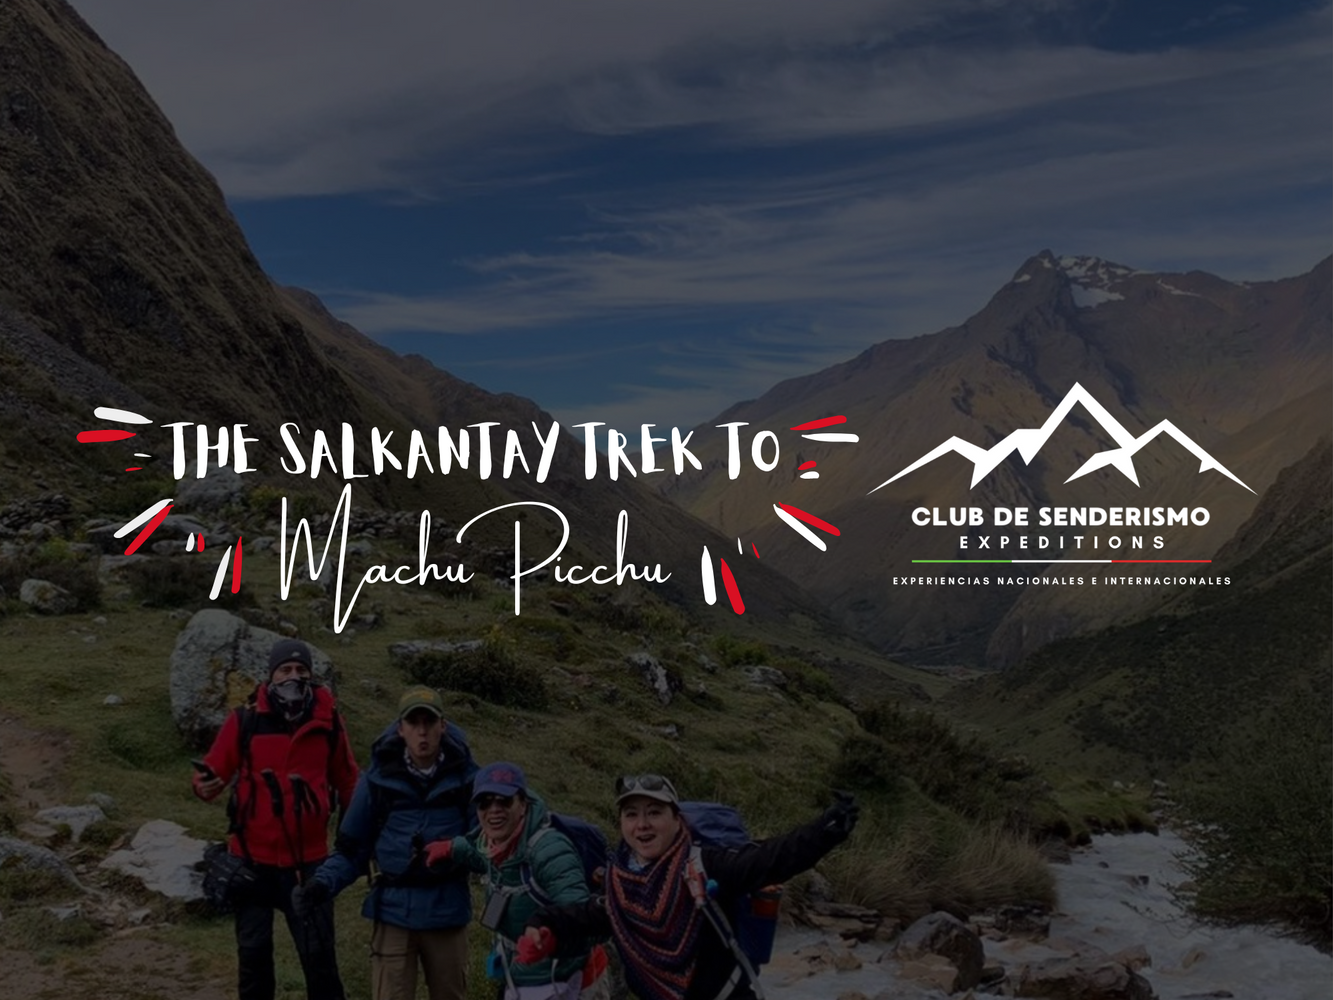 The Salkantay Trek To Machu Picchu